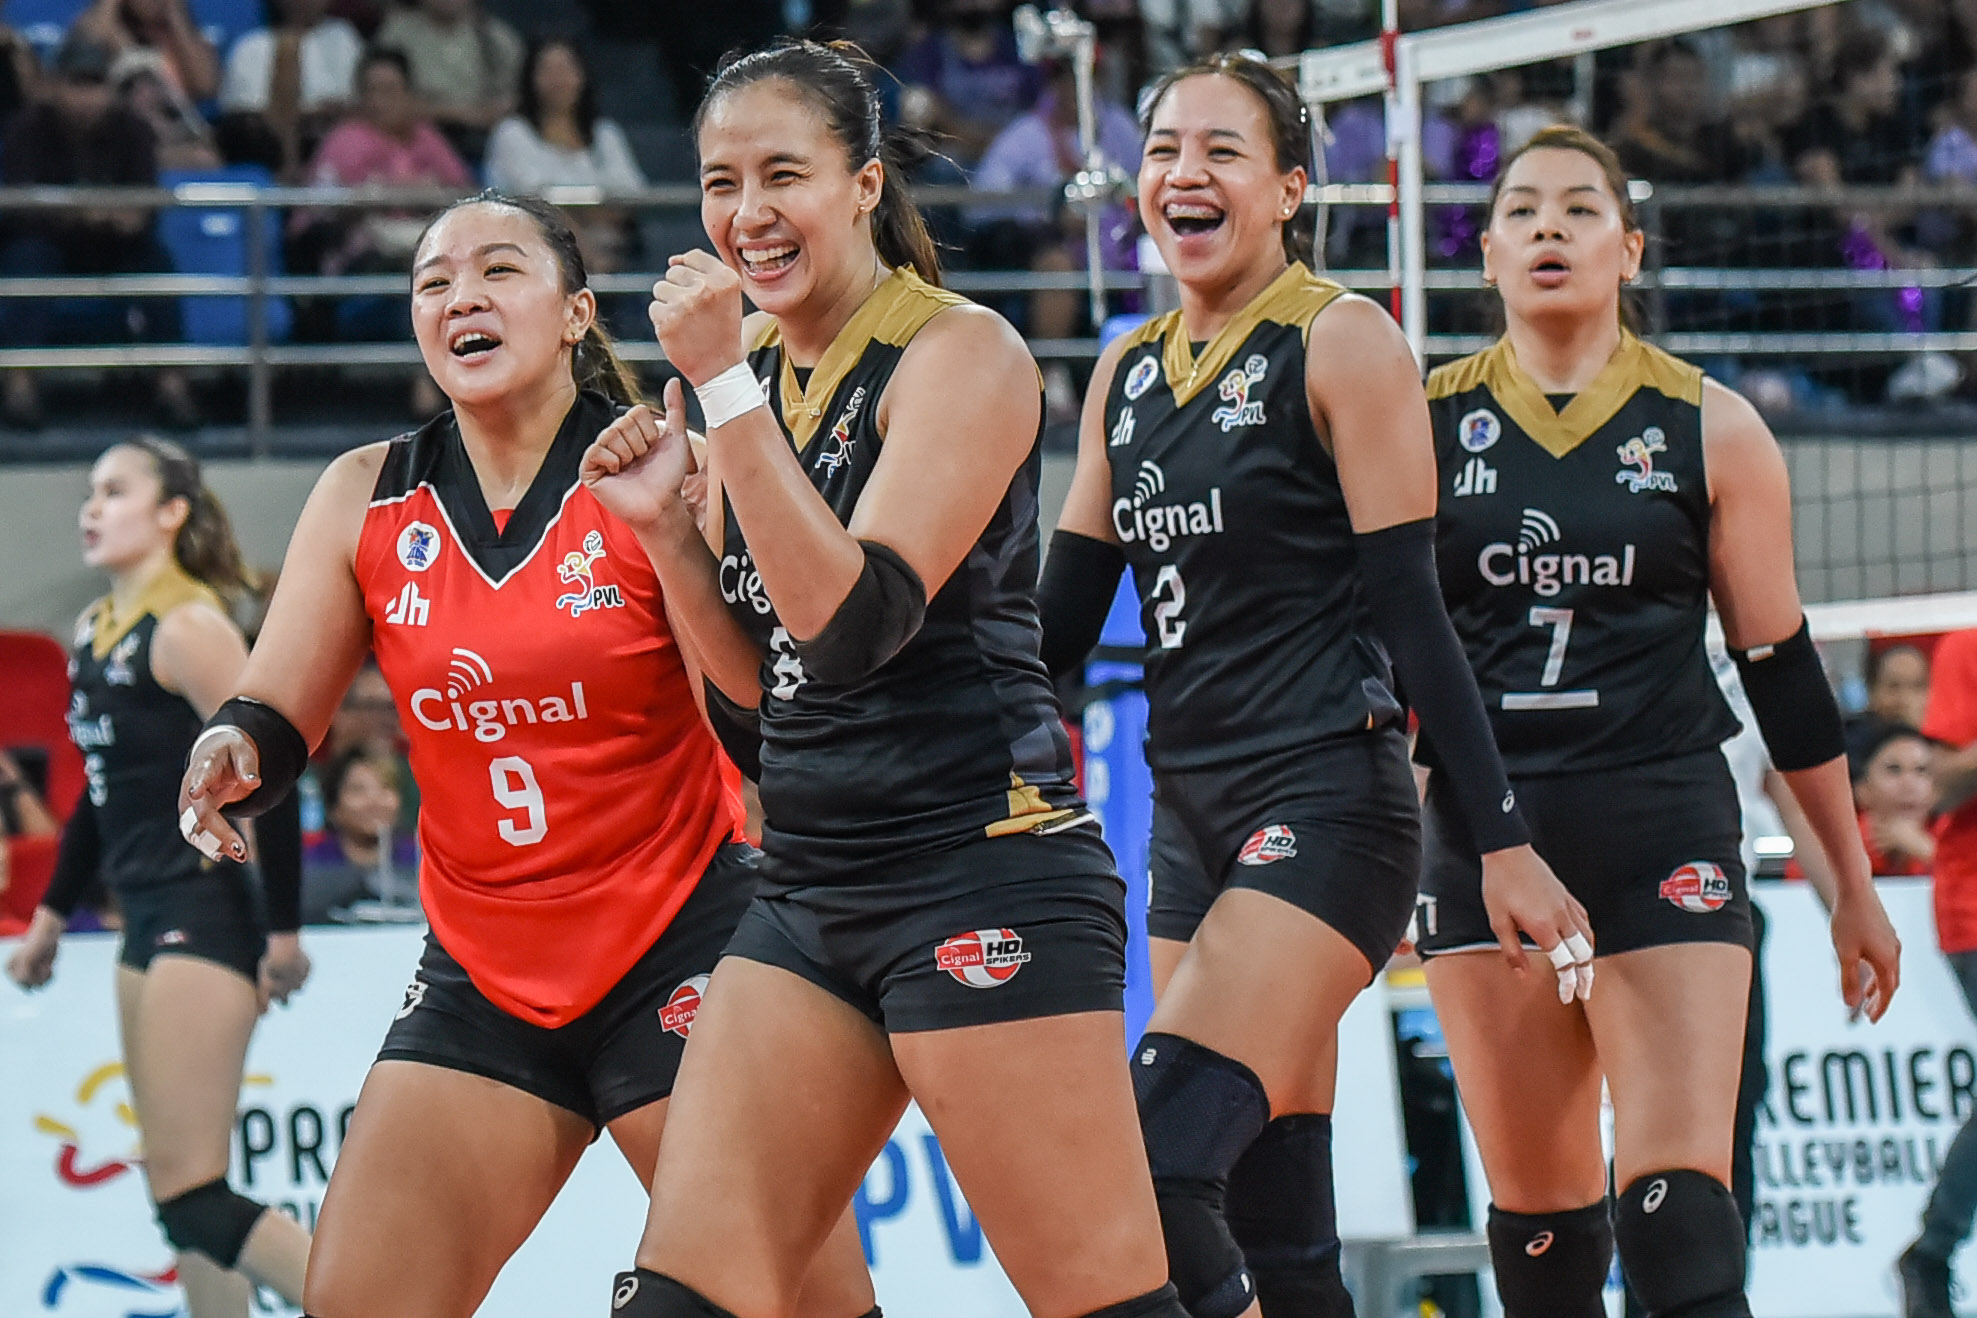 PVL-AFC-Semis-Choco-Mucho-vs.-Cignal-Jov-Gonzaga-2310 PVL: Cignal ends Choco Mucho's 10-game streak in semis opener News PVL Volleyball  - philippine sports news